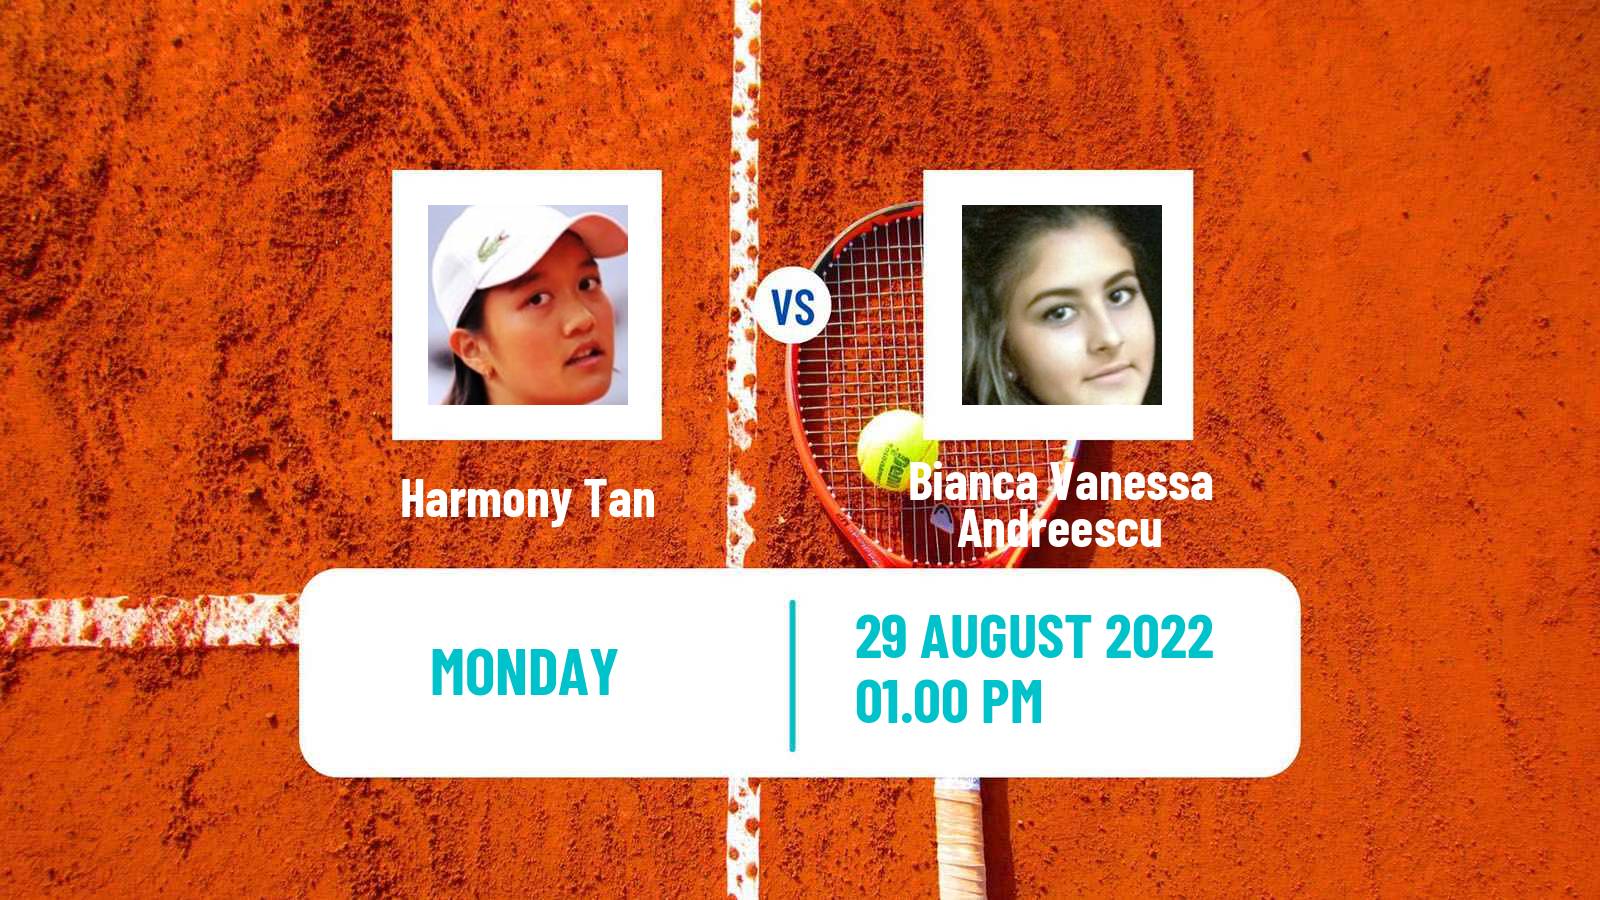 Tennis WTA US Open Harmony Tan - Bianca Vanessa Andreescu